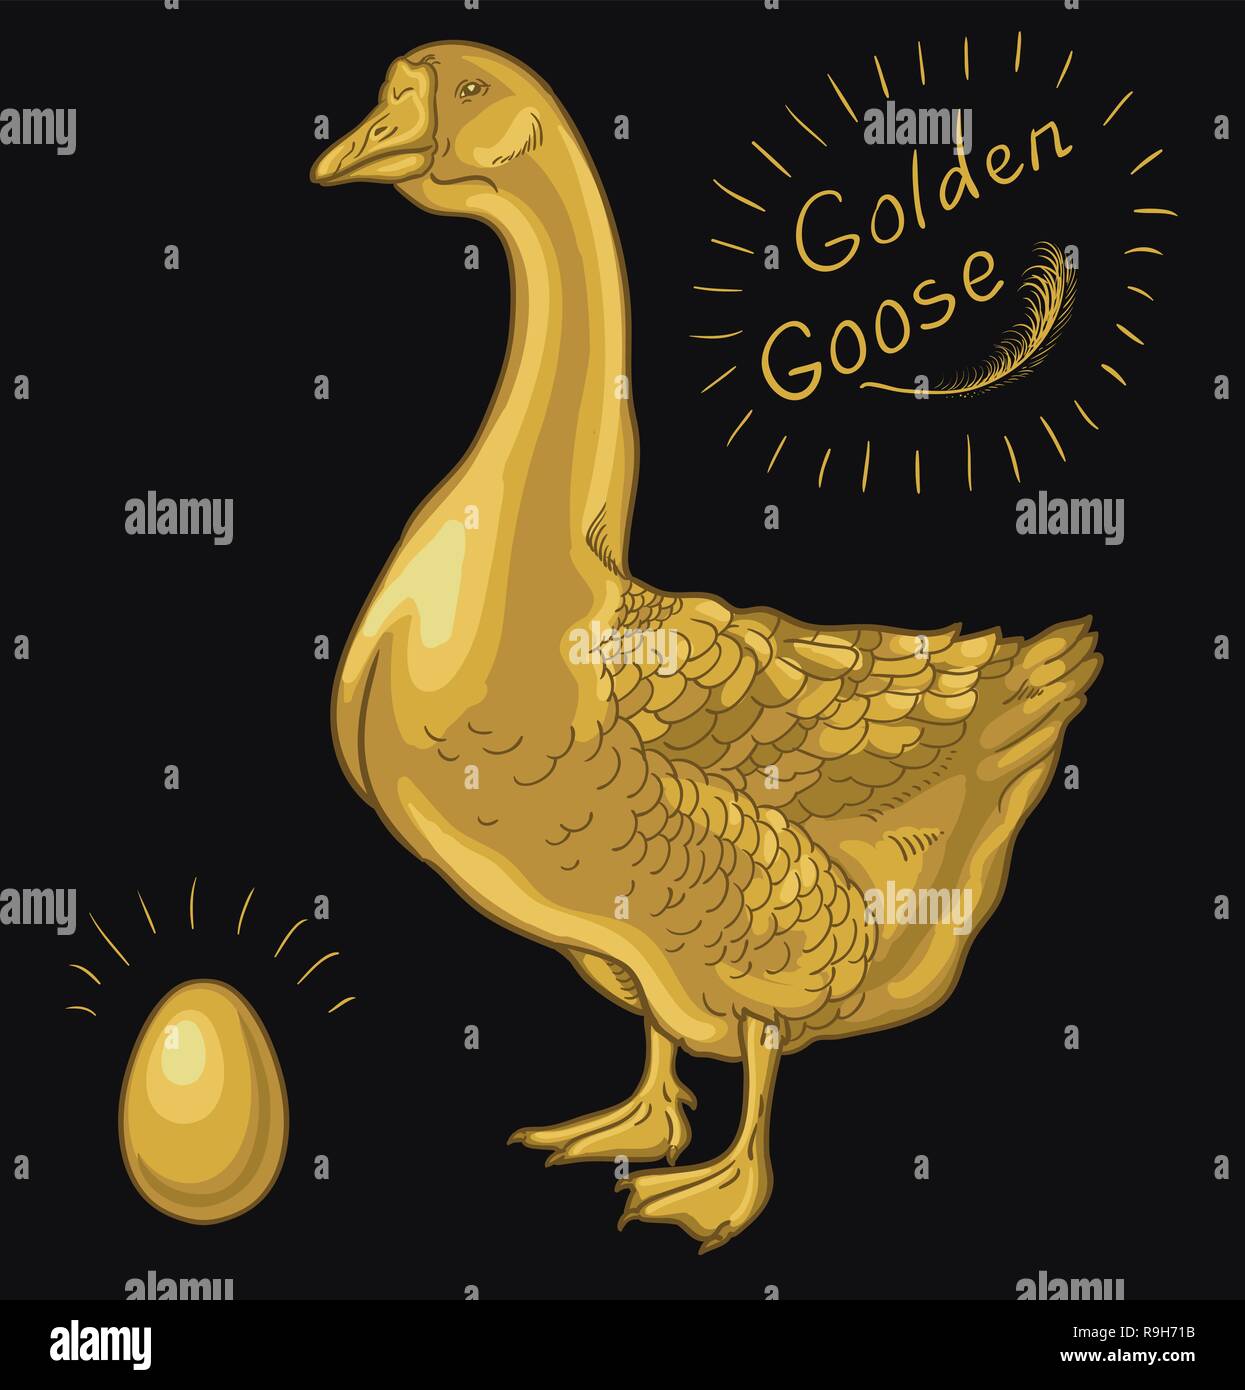 The Golden Goose | lupon.gov.ph